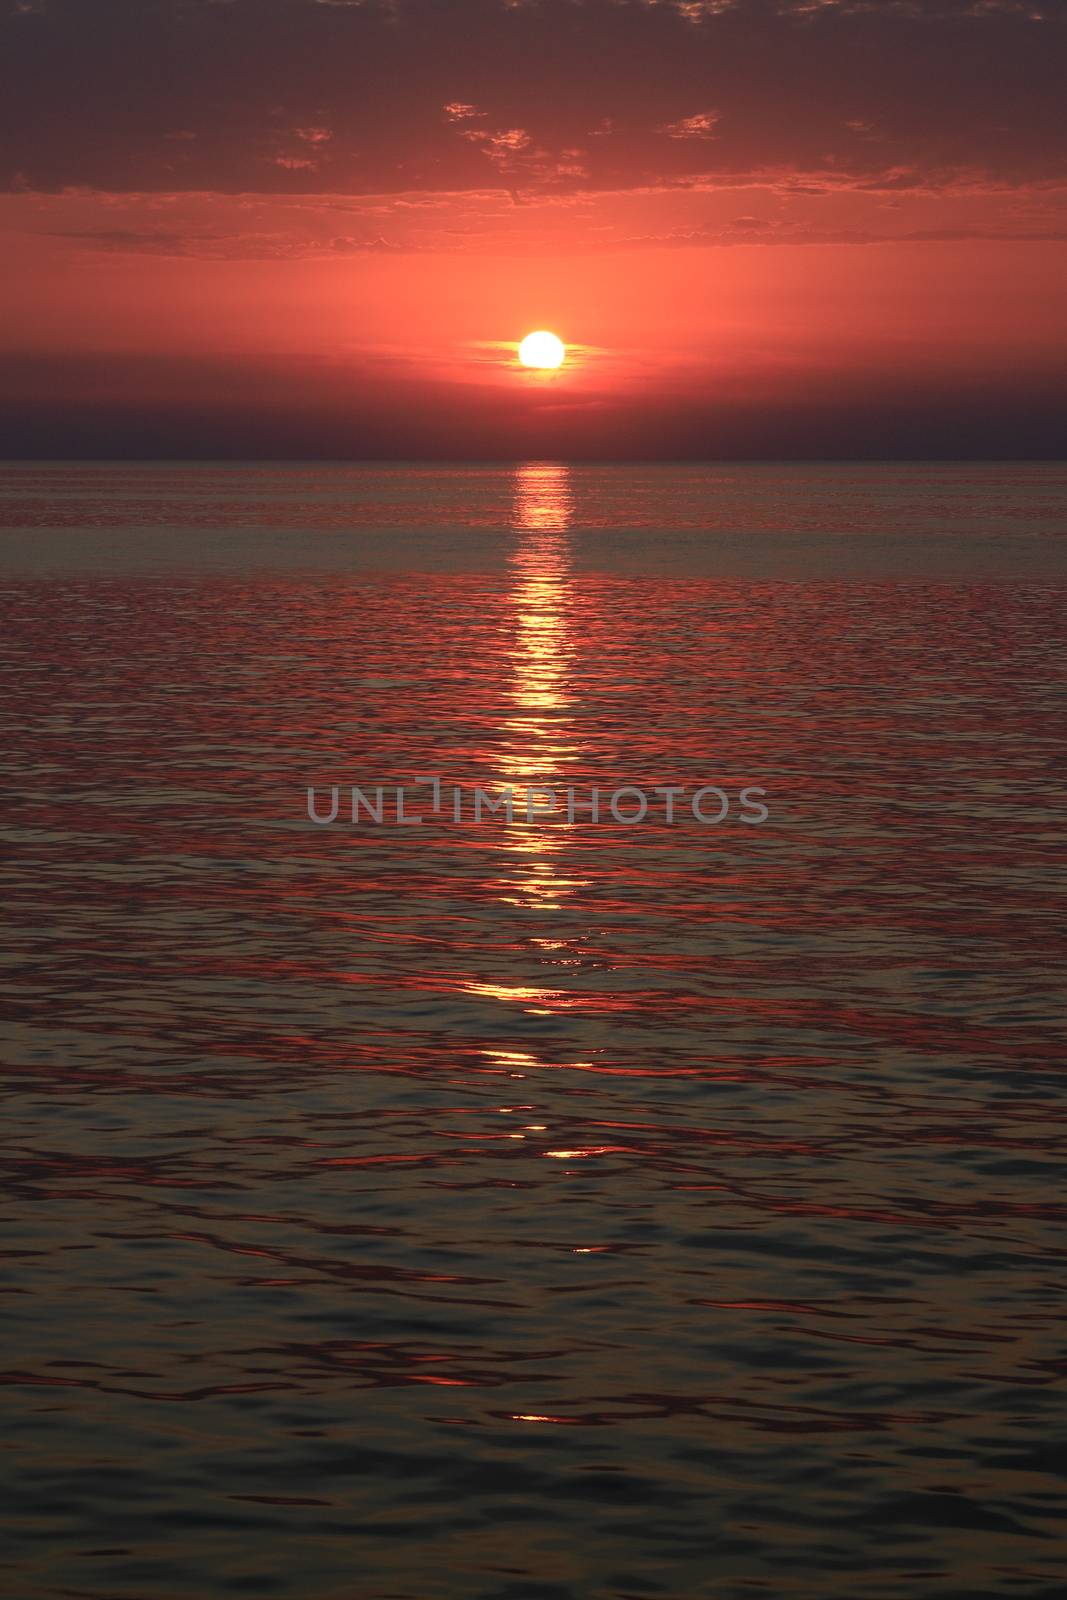 Sunset off the coast of the Greek island of Mykonos.